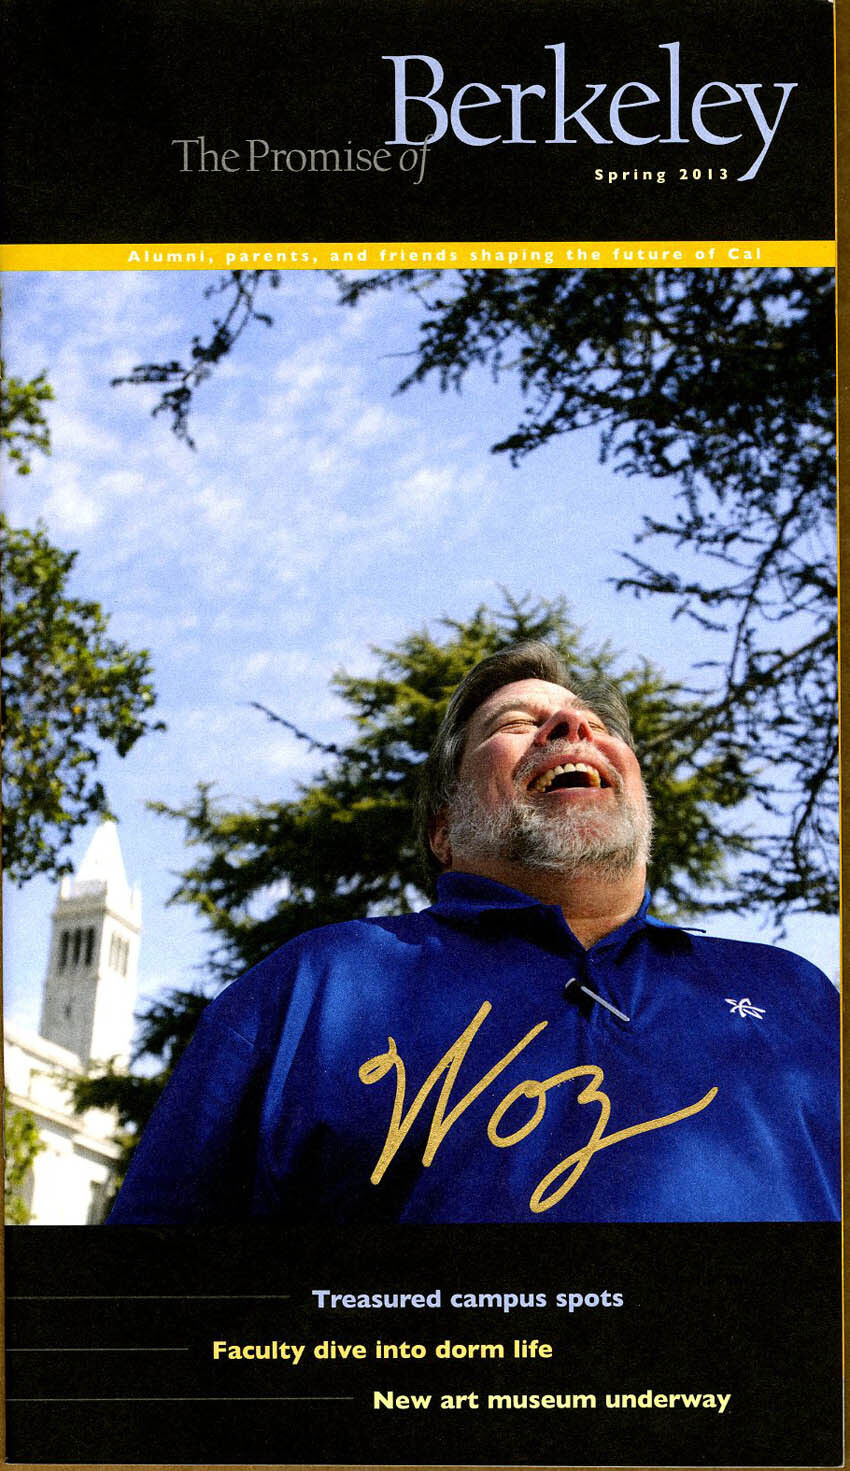 Steve Wozniak SIGNED AUTOGRAPHED University of CA Berkeley Prog Computer Creator